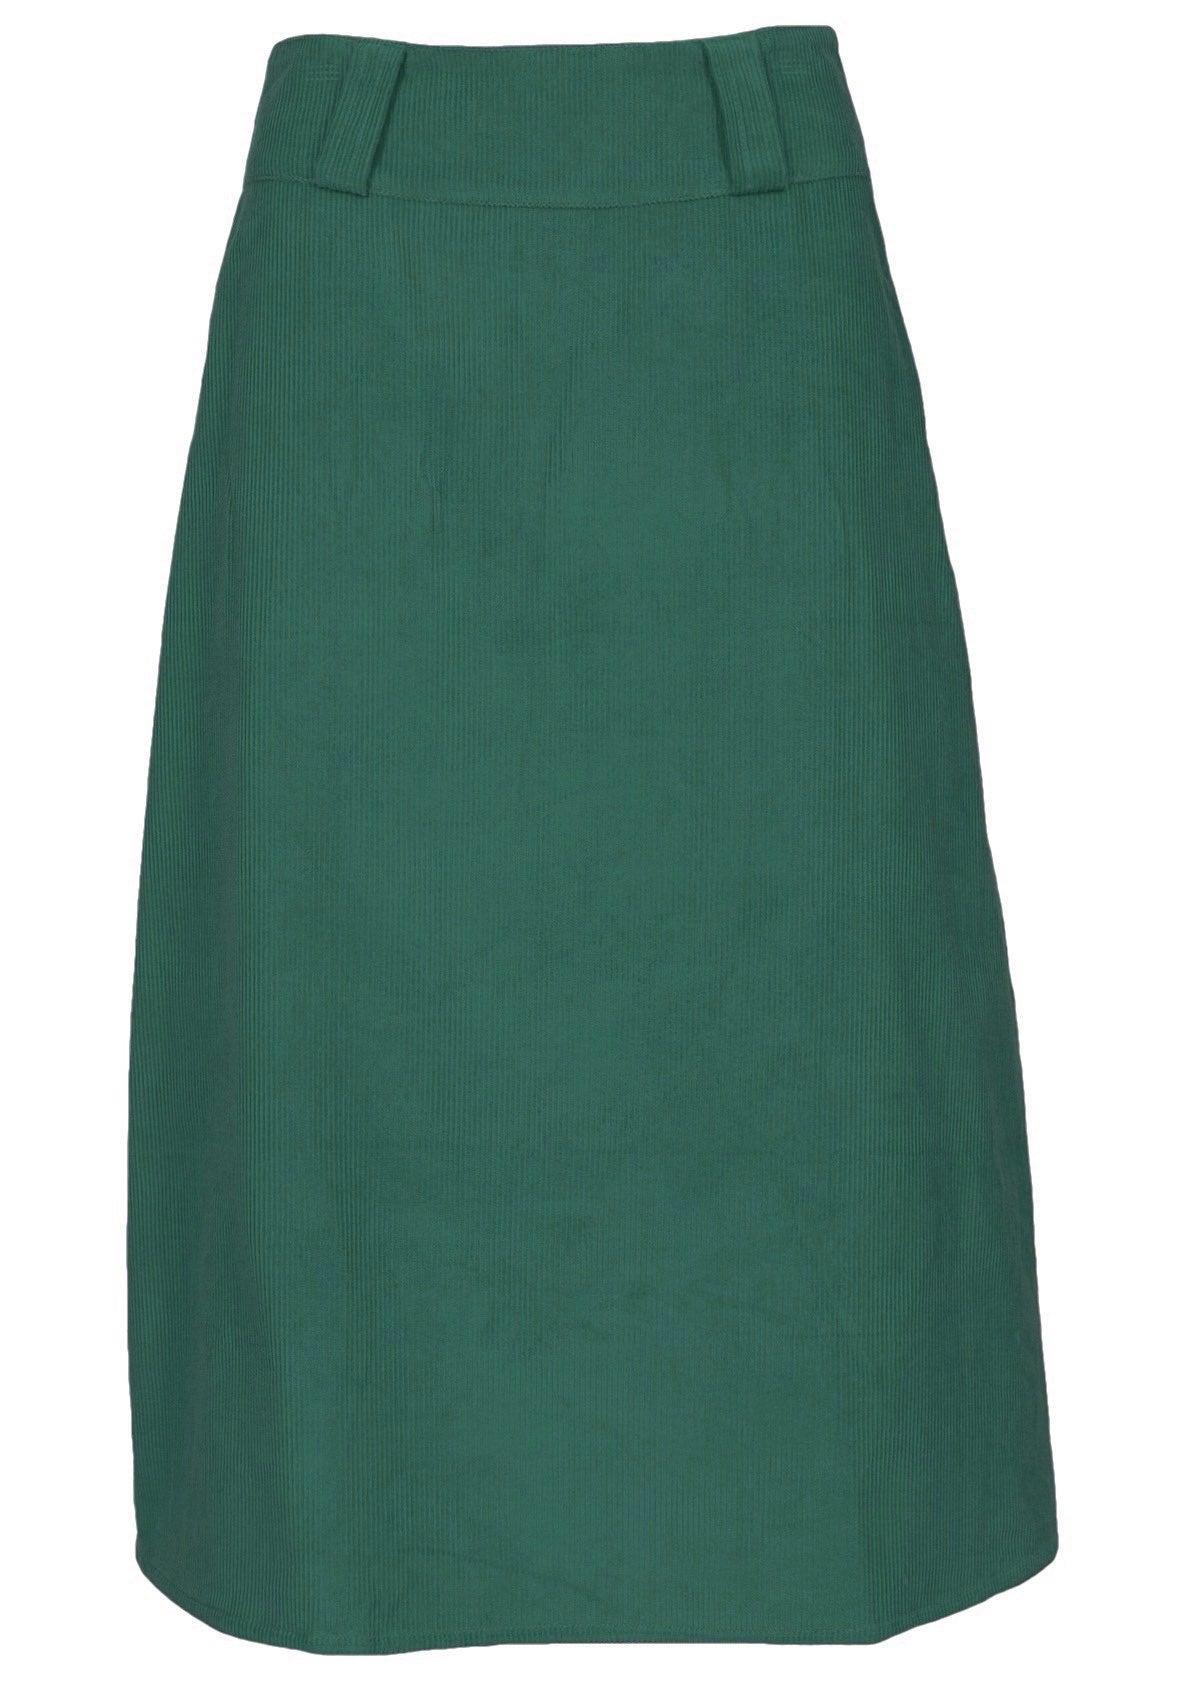 Hunter green 100% cotton corduroy skirt ends at the shin. 